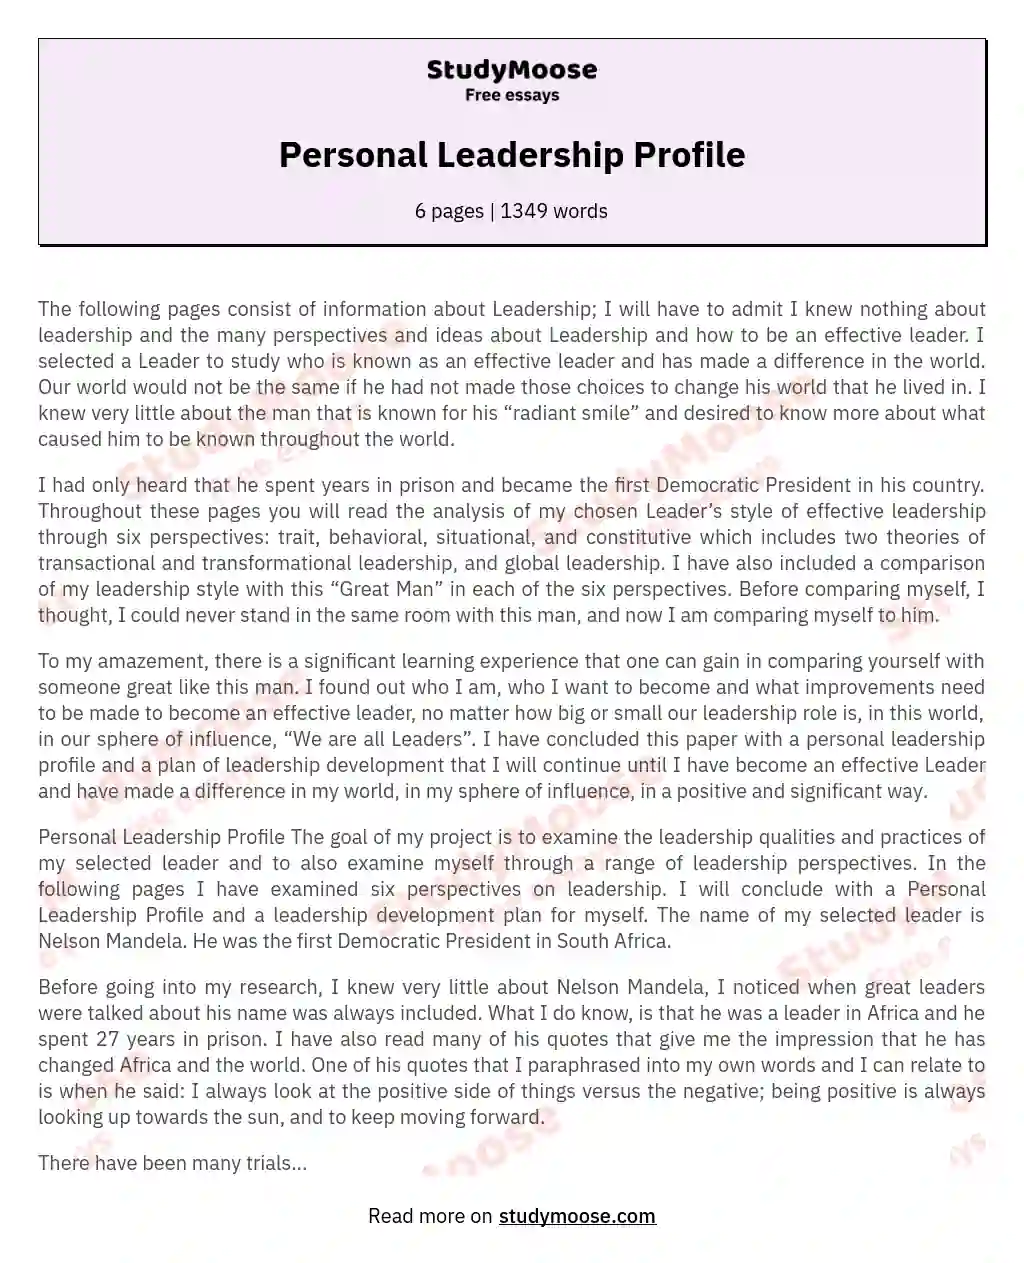 Personal Leadership Profile essay